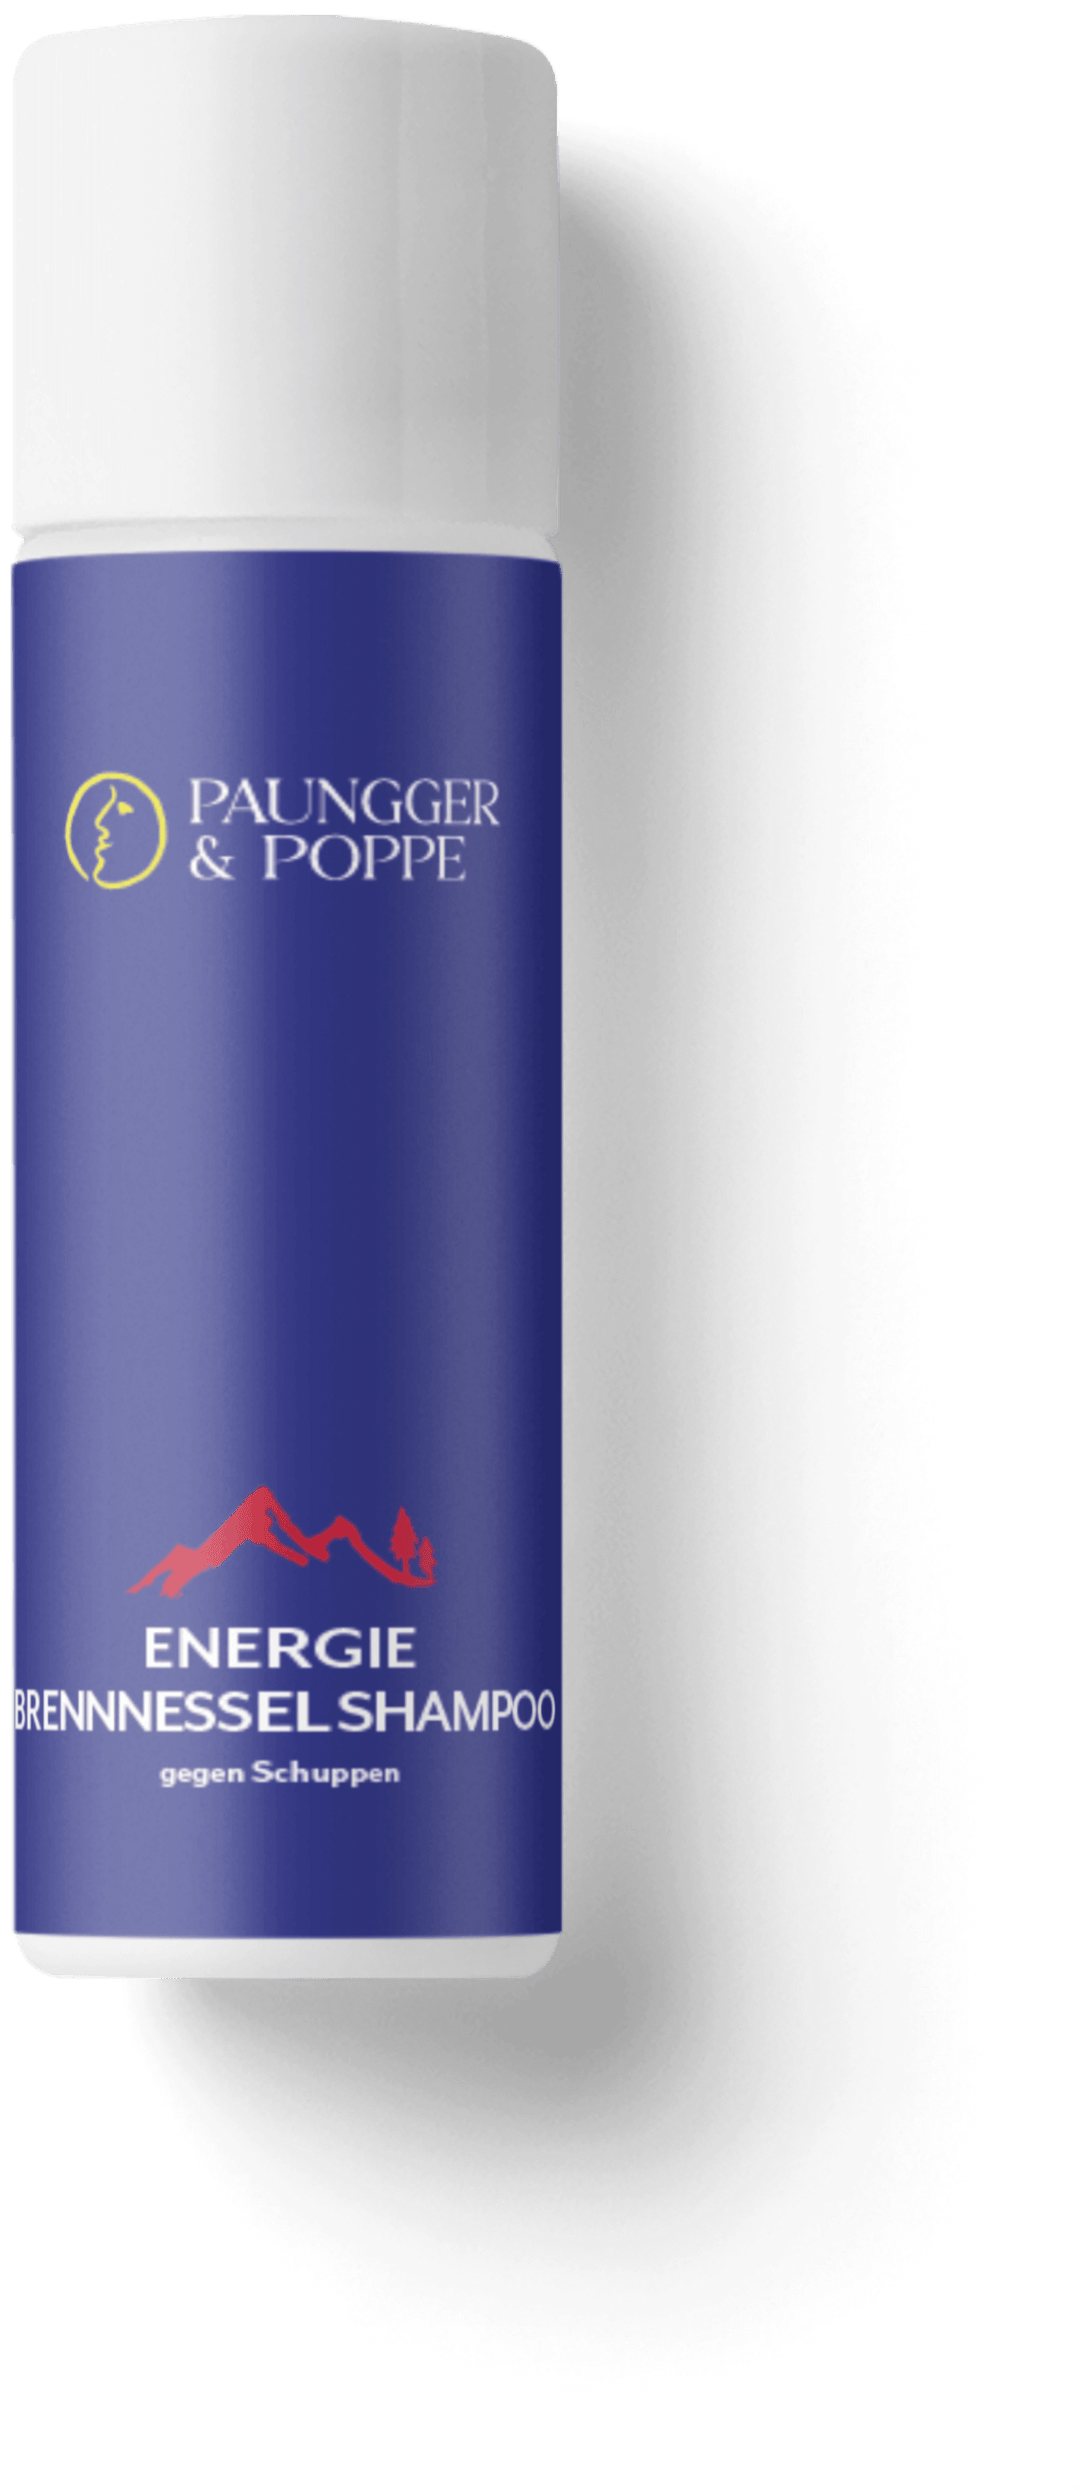 Energie Brennnessel Shampoo - gegen Schuppen | Mondversand